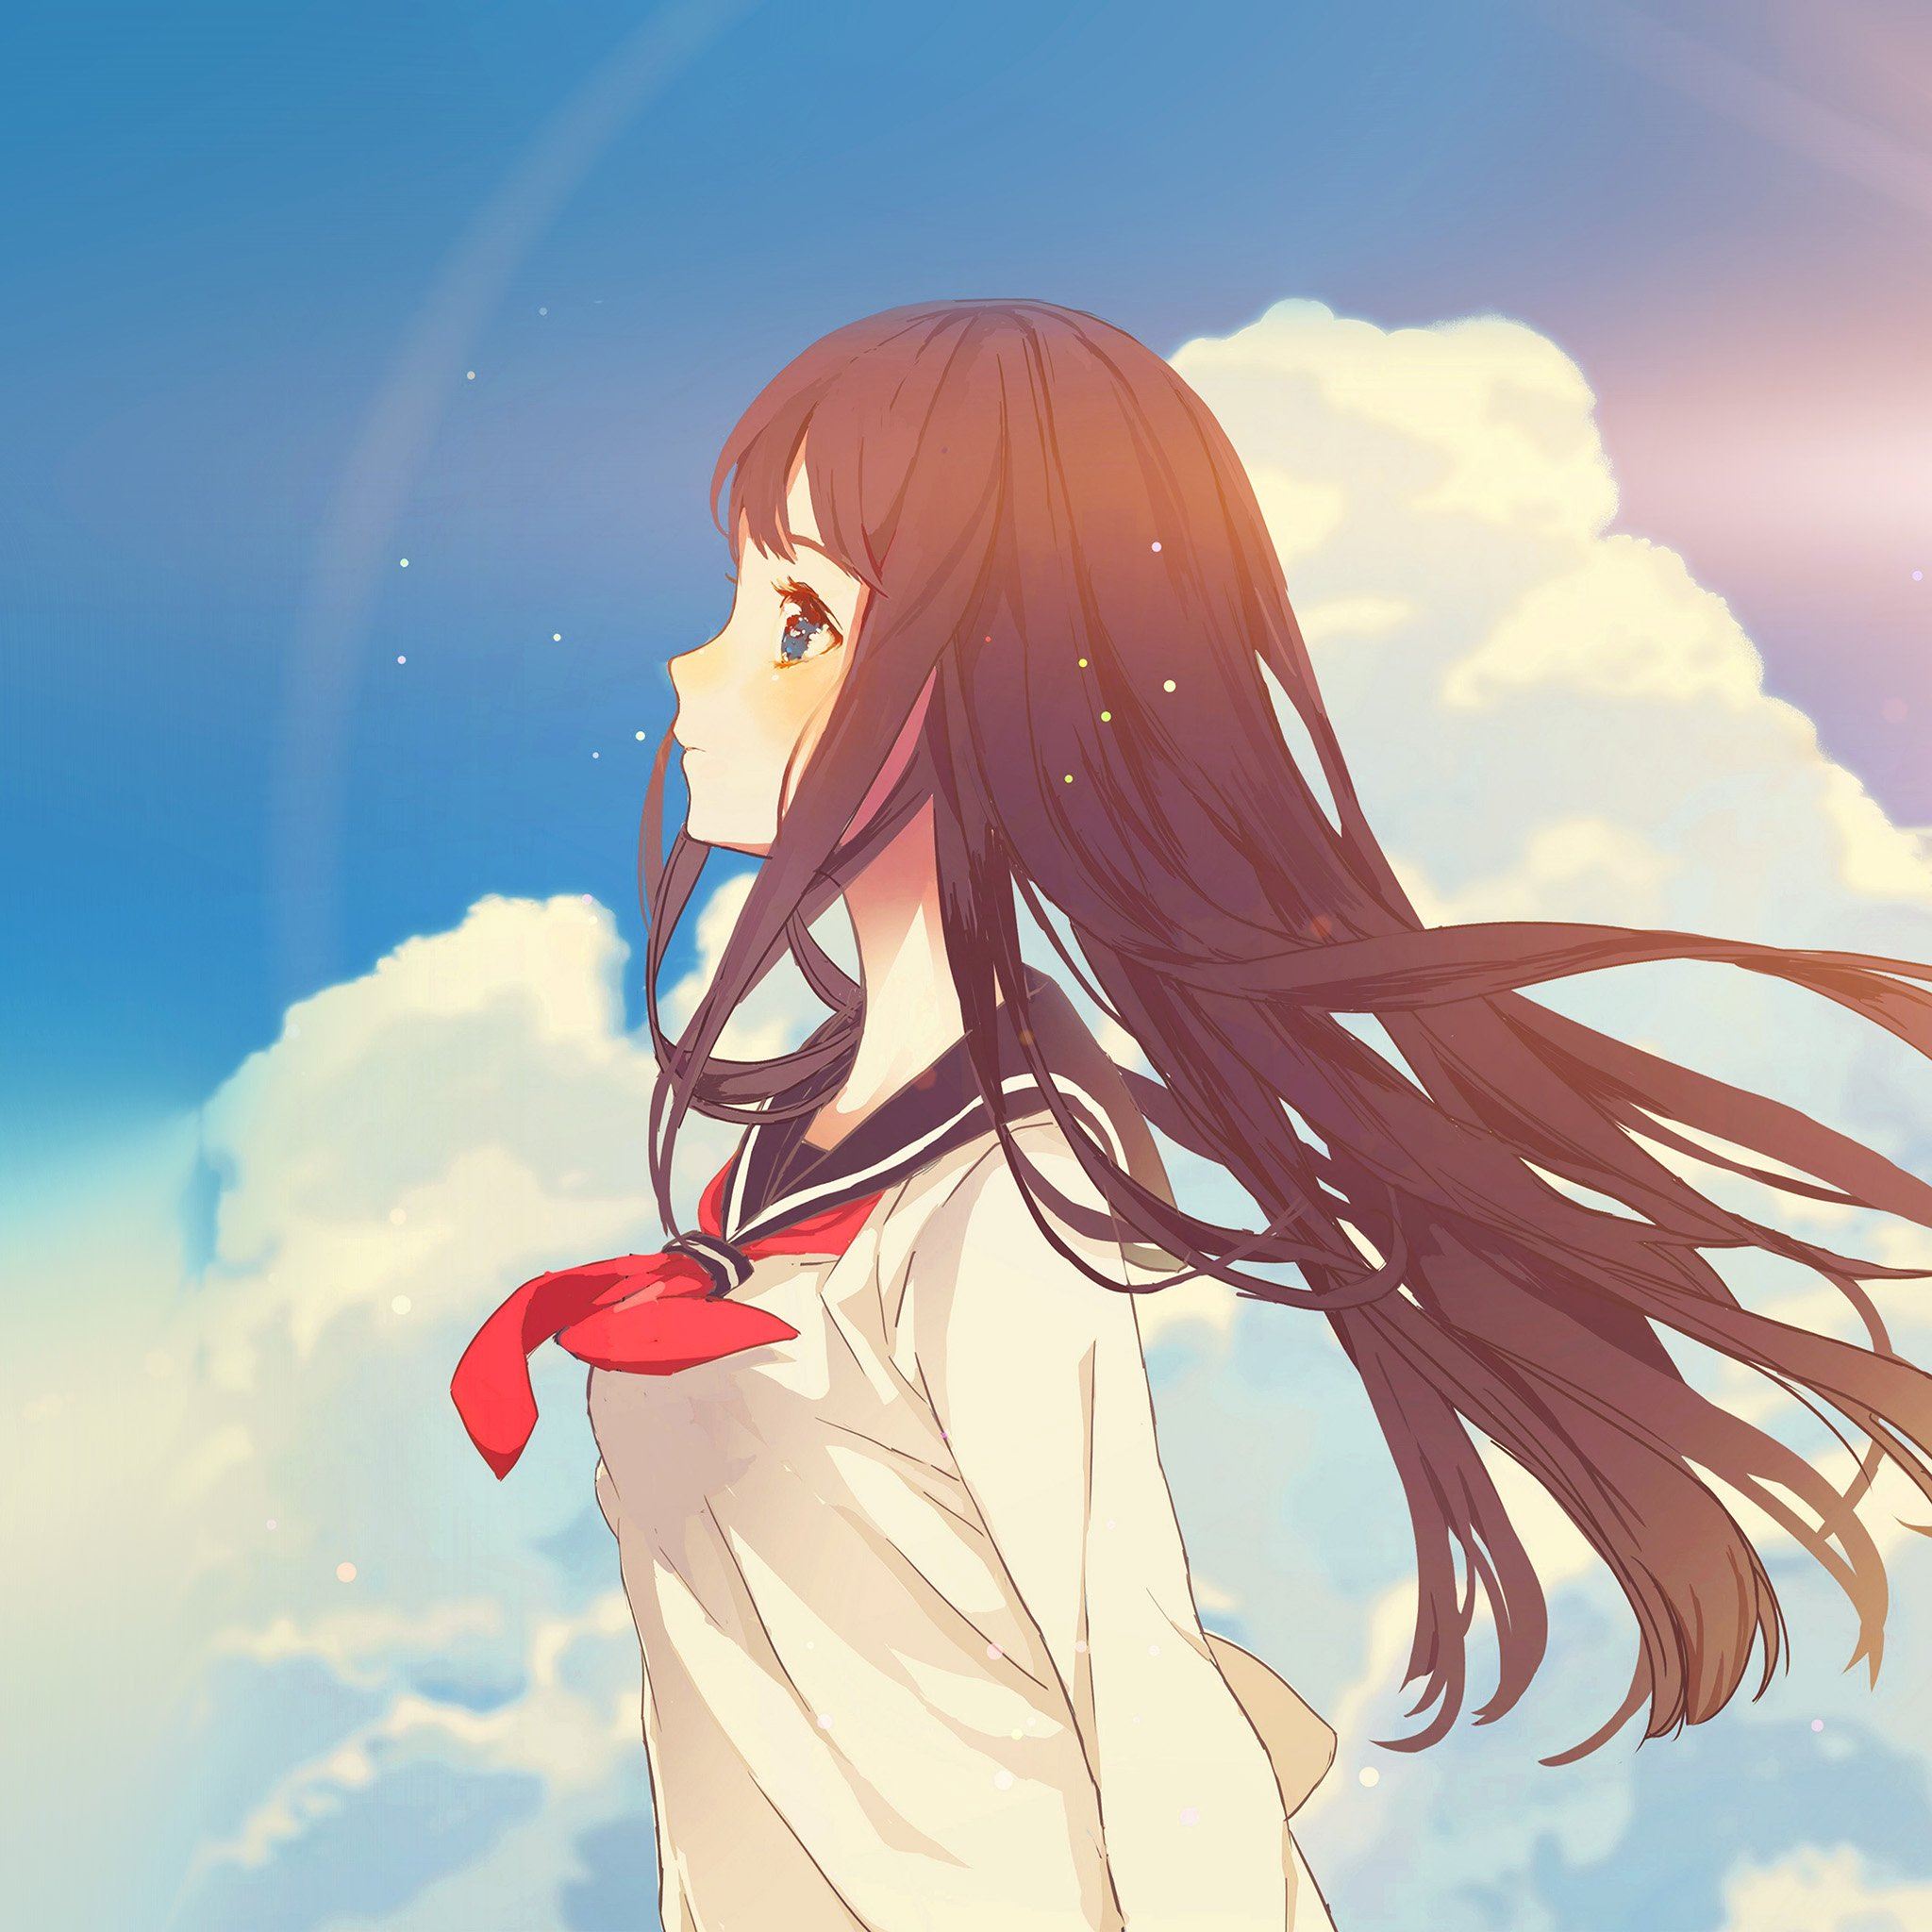 Cute Girl Illustration Anime Sky Flare iPad Air Wallpaper Free Download